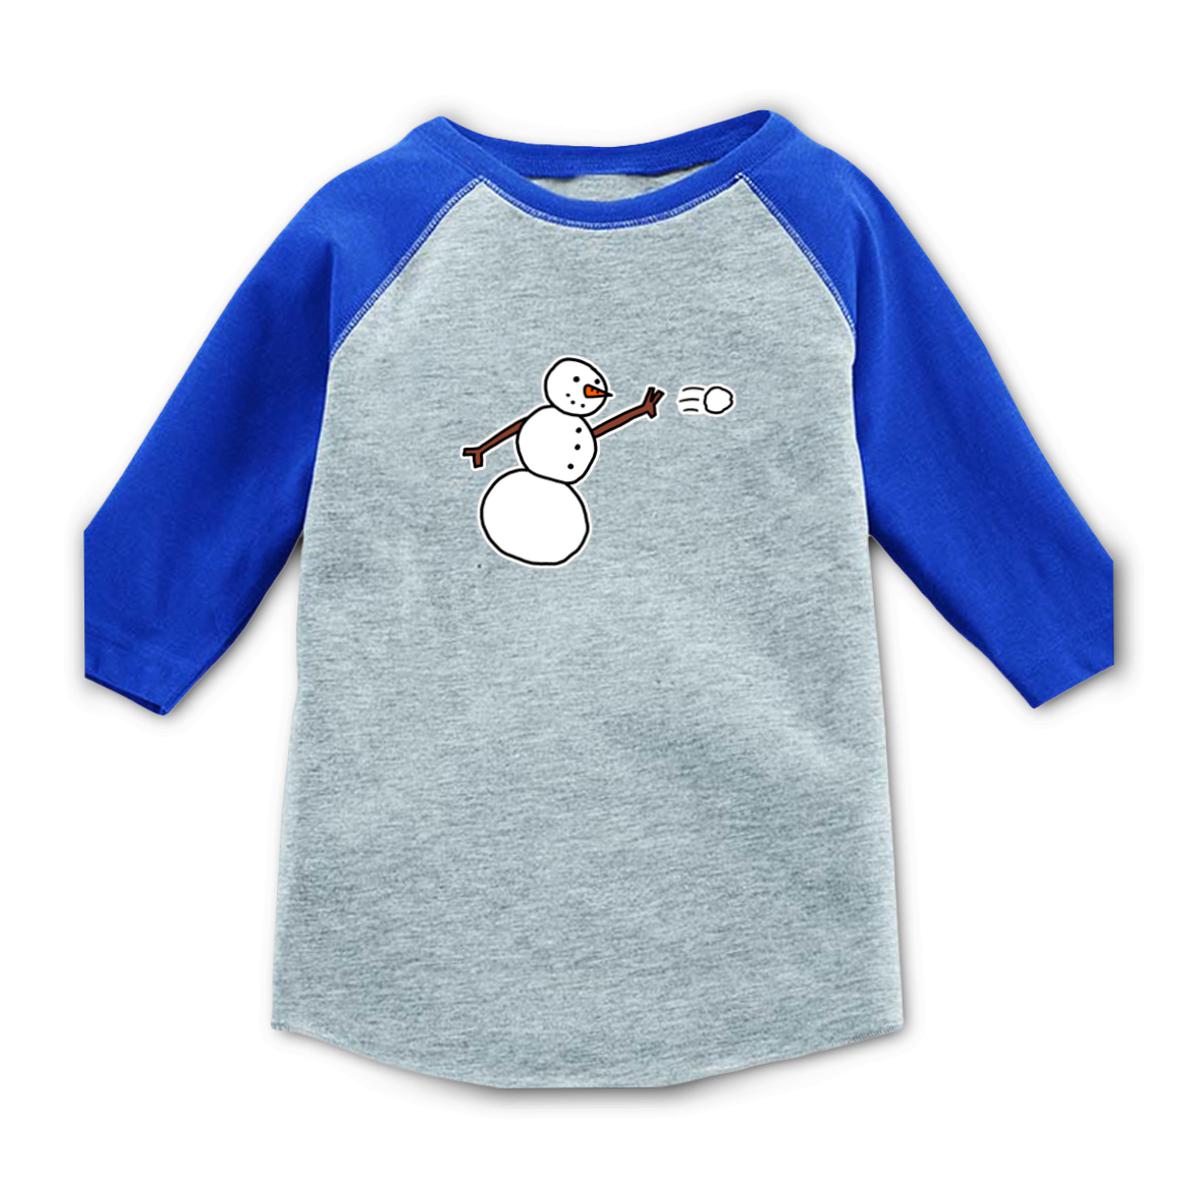 Snowman Throwing Snowball Toddler Raglan Tee 4T heather-royal